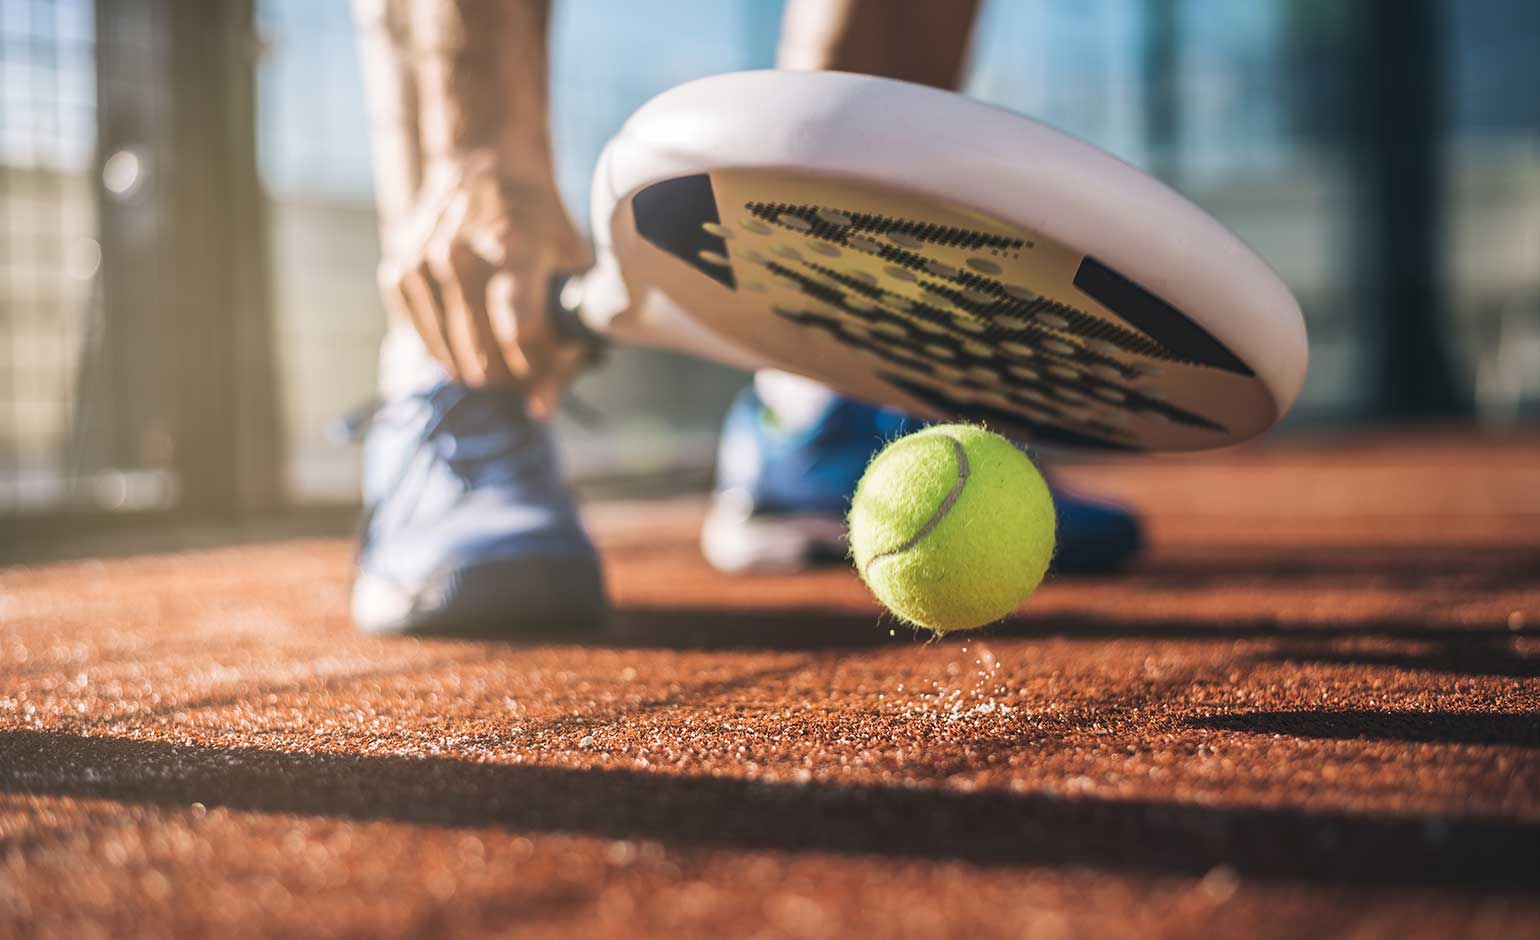 Tennis club seeking permission for Padel courts at Lansdown site